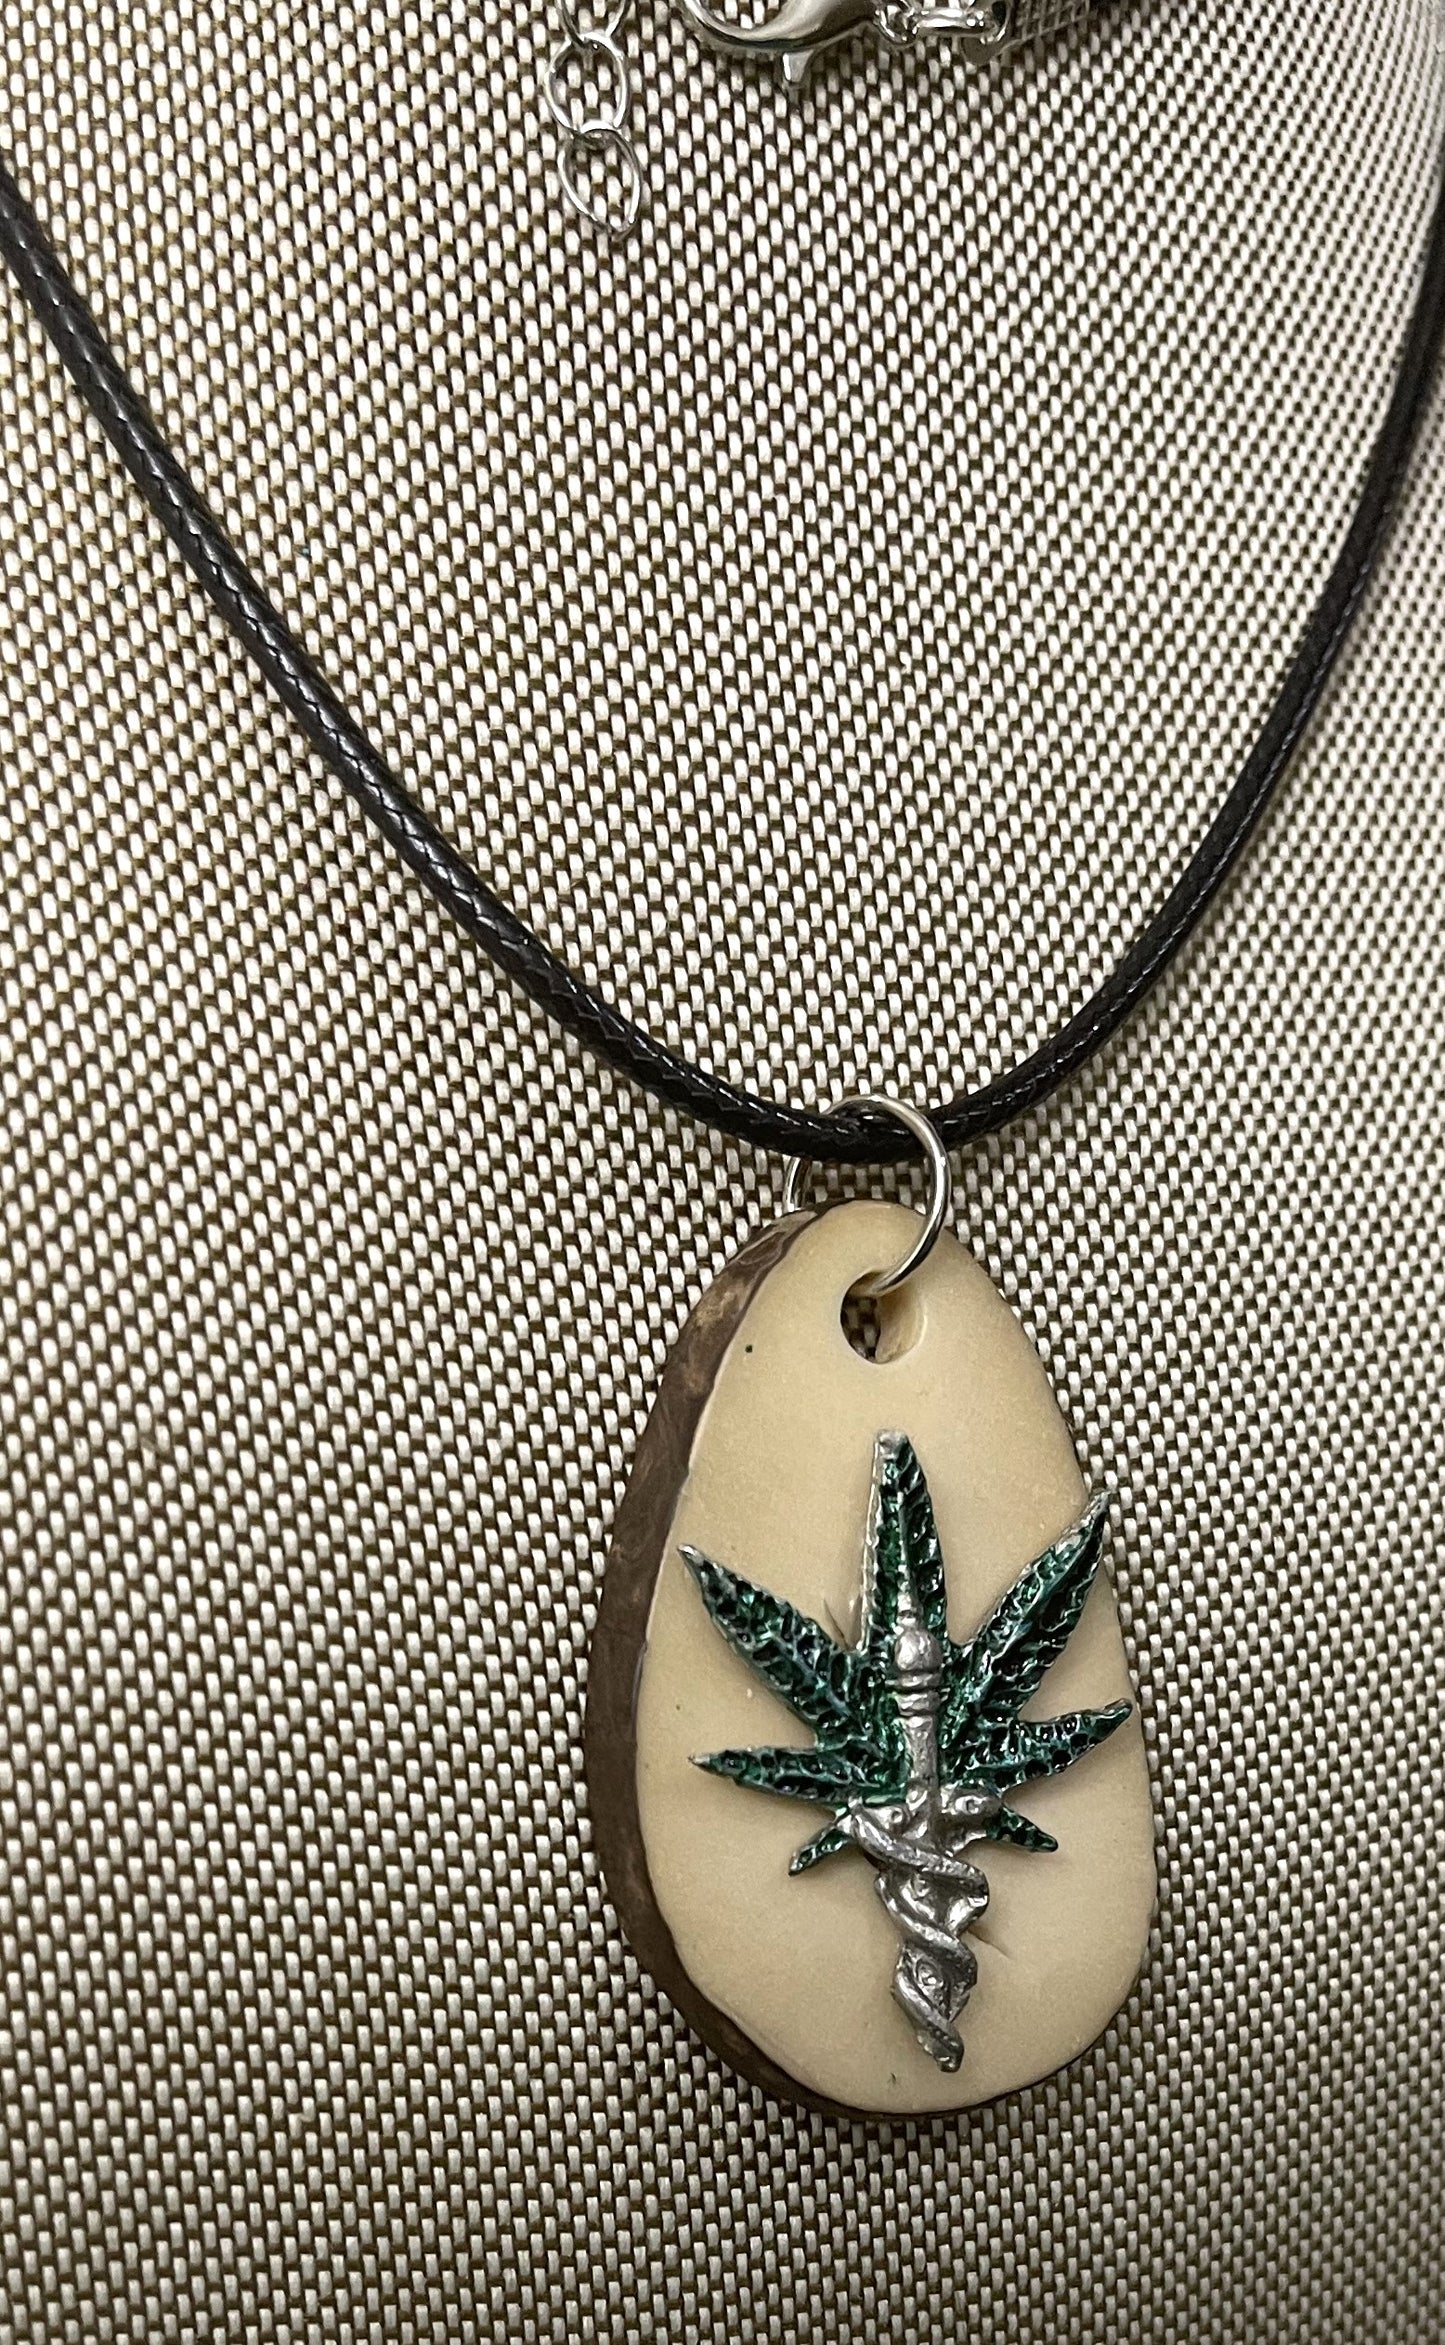 Medical Marijuana Leaf Caduceus Tagua Necklace Pendant Panama